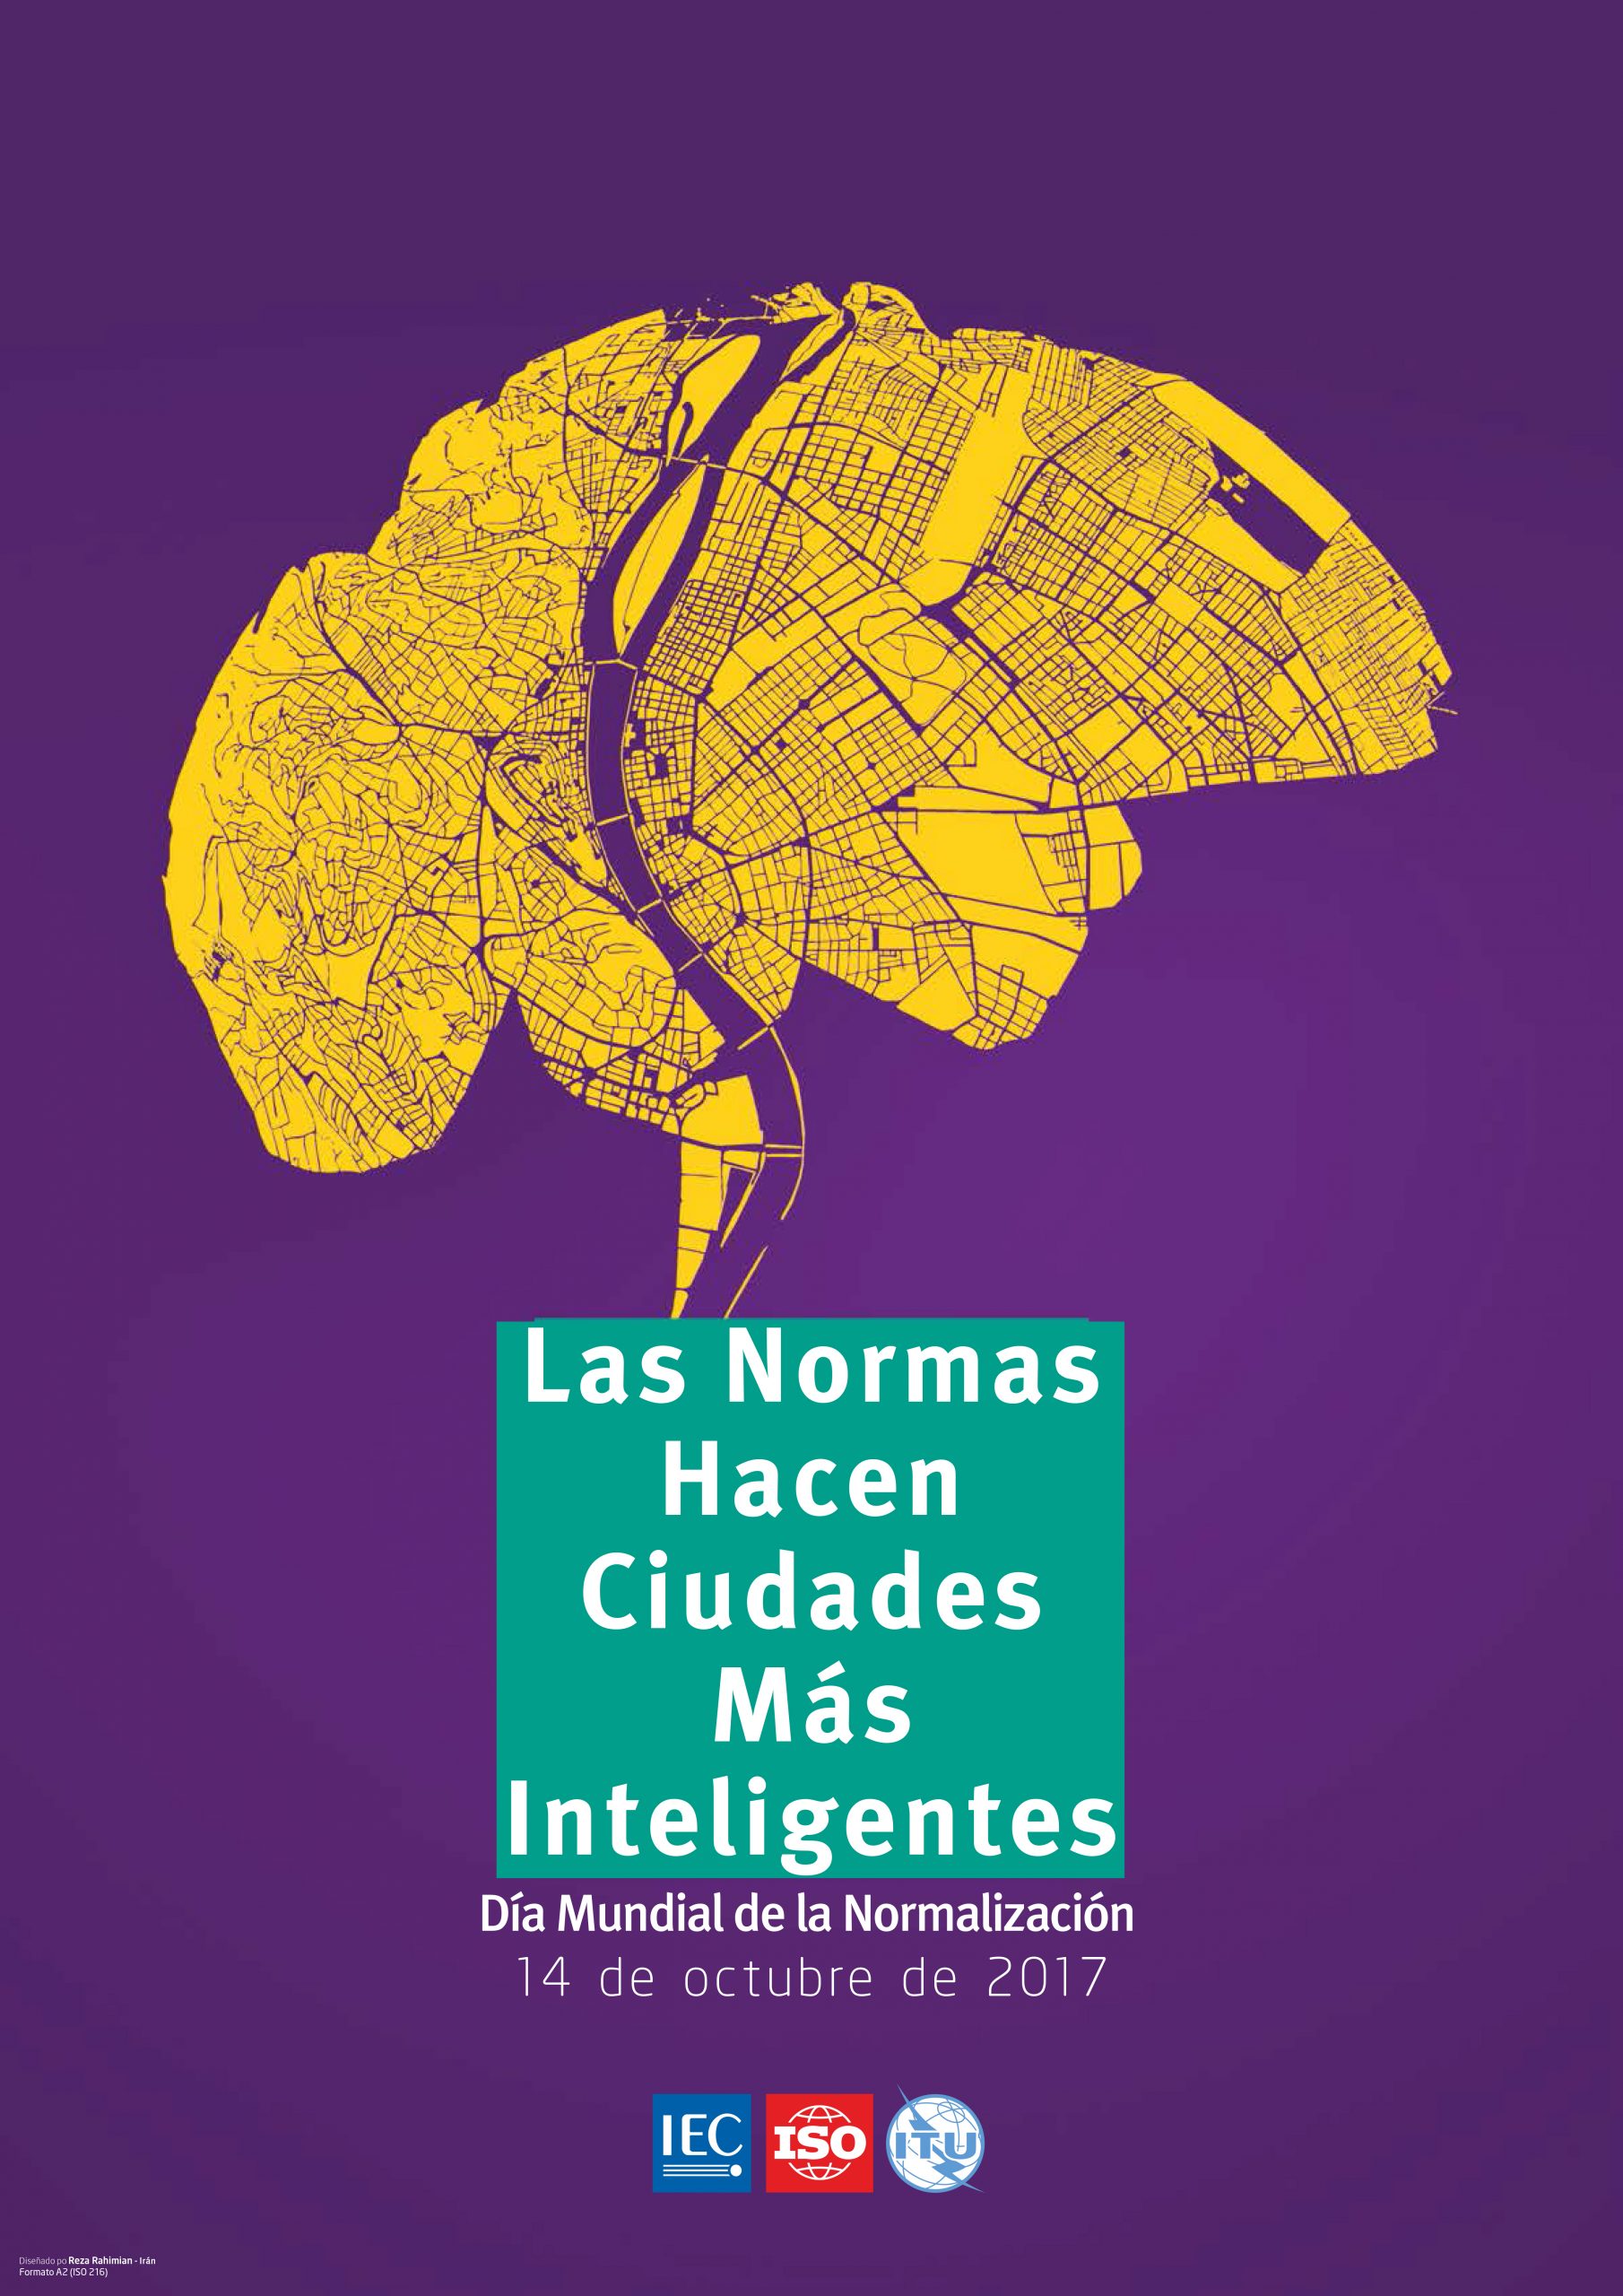 España, referente mundial en normas sobre ciudades inteligentes